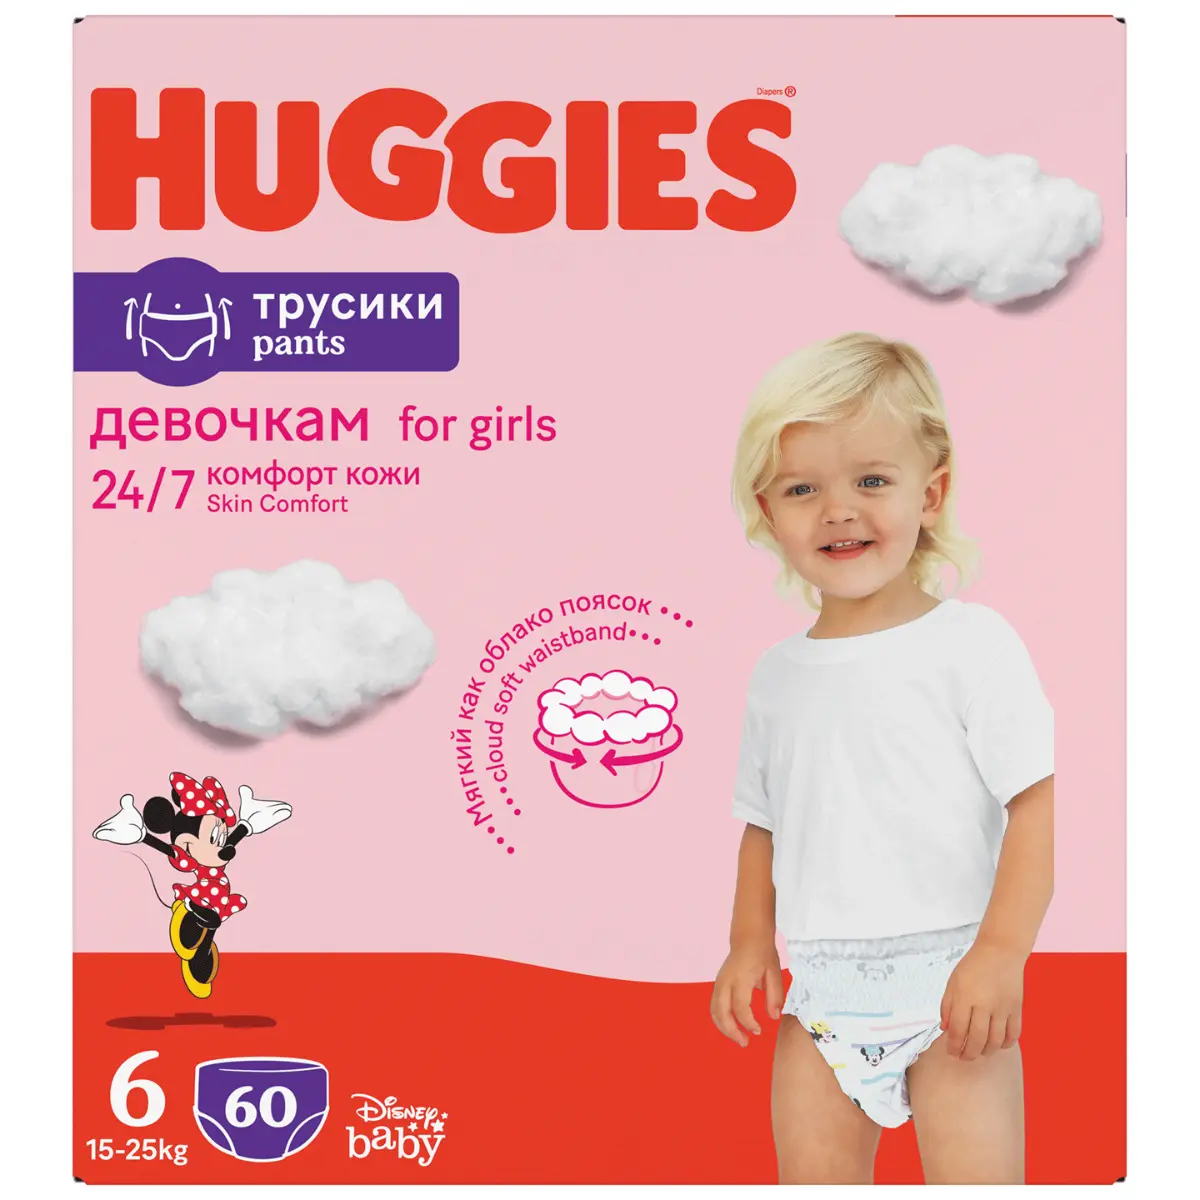 Scutece chilotel, Huggies Box Pants, nr. 6, girl,15-25 kg, box 60 buc